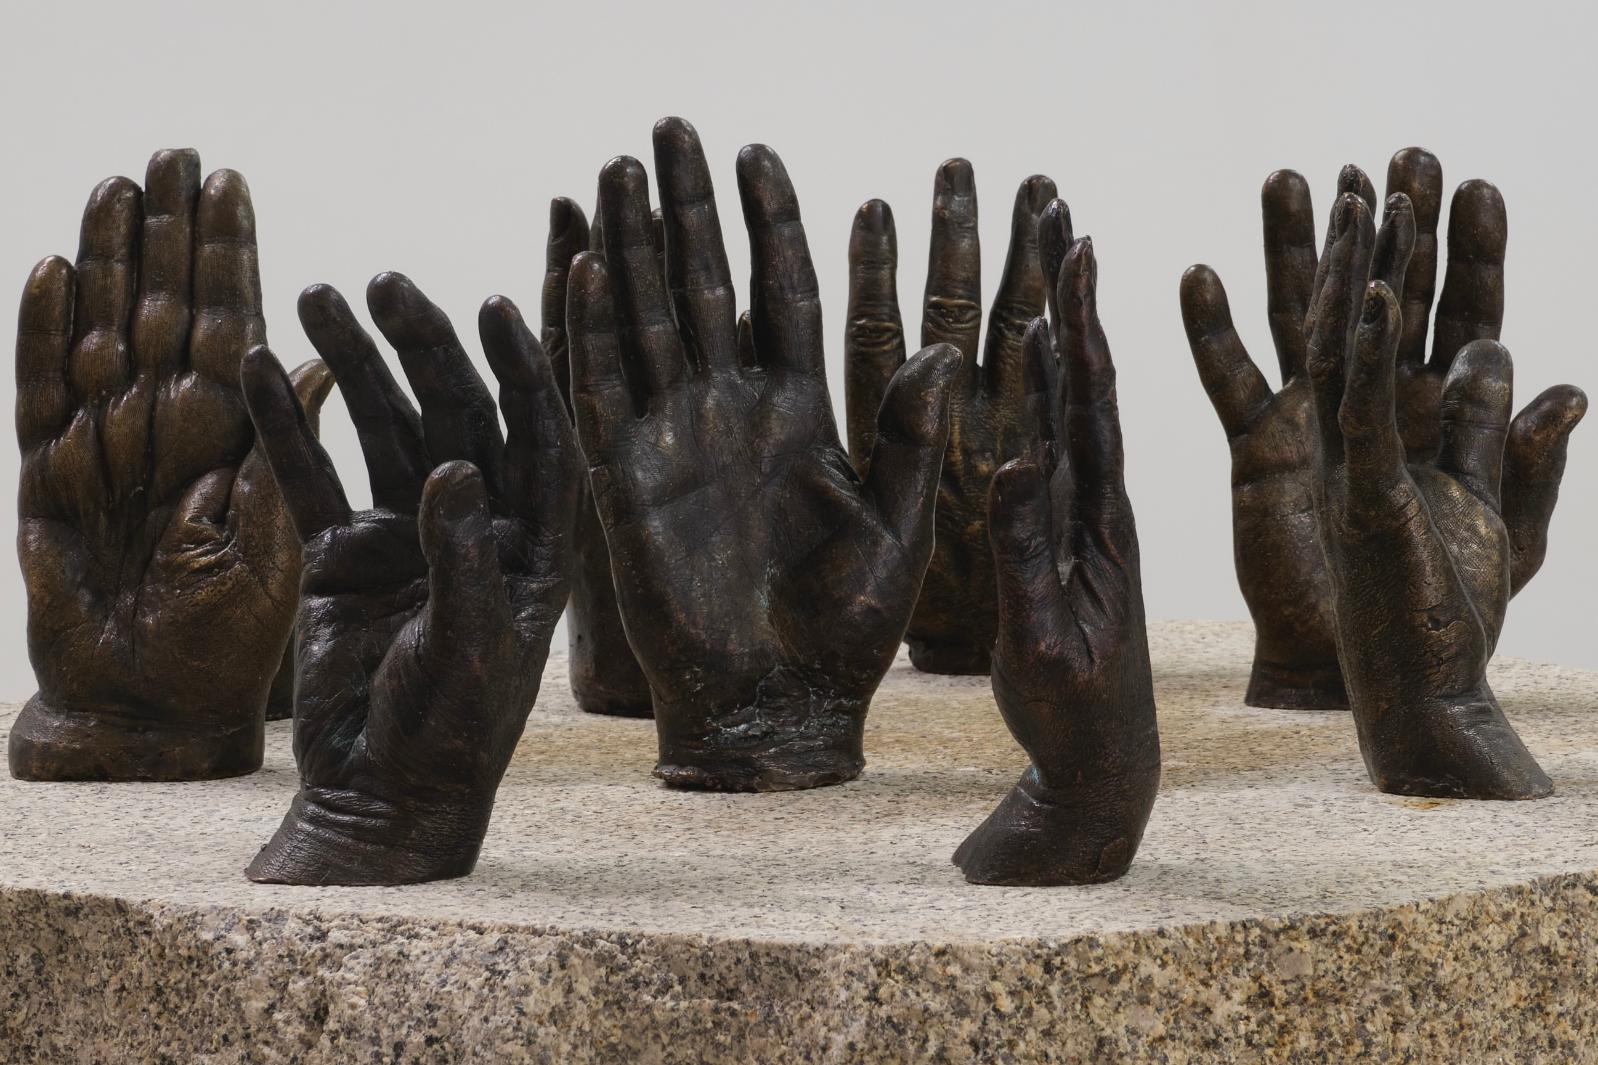 Installation shot of Raymond Watson's work 'Hands of History'. Assortment of bronze cast hands arrange on a stone plinth.